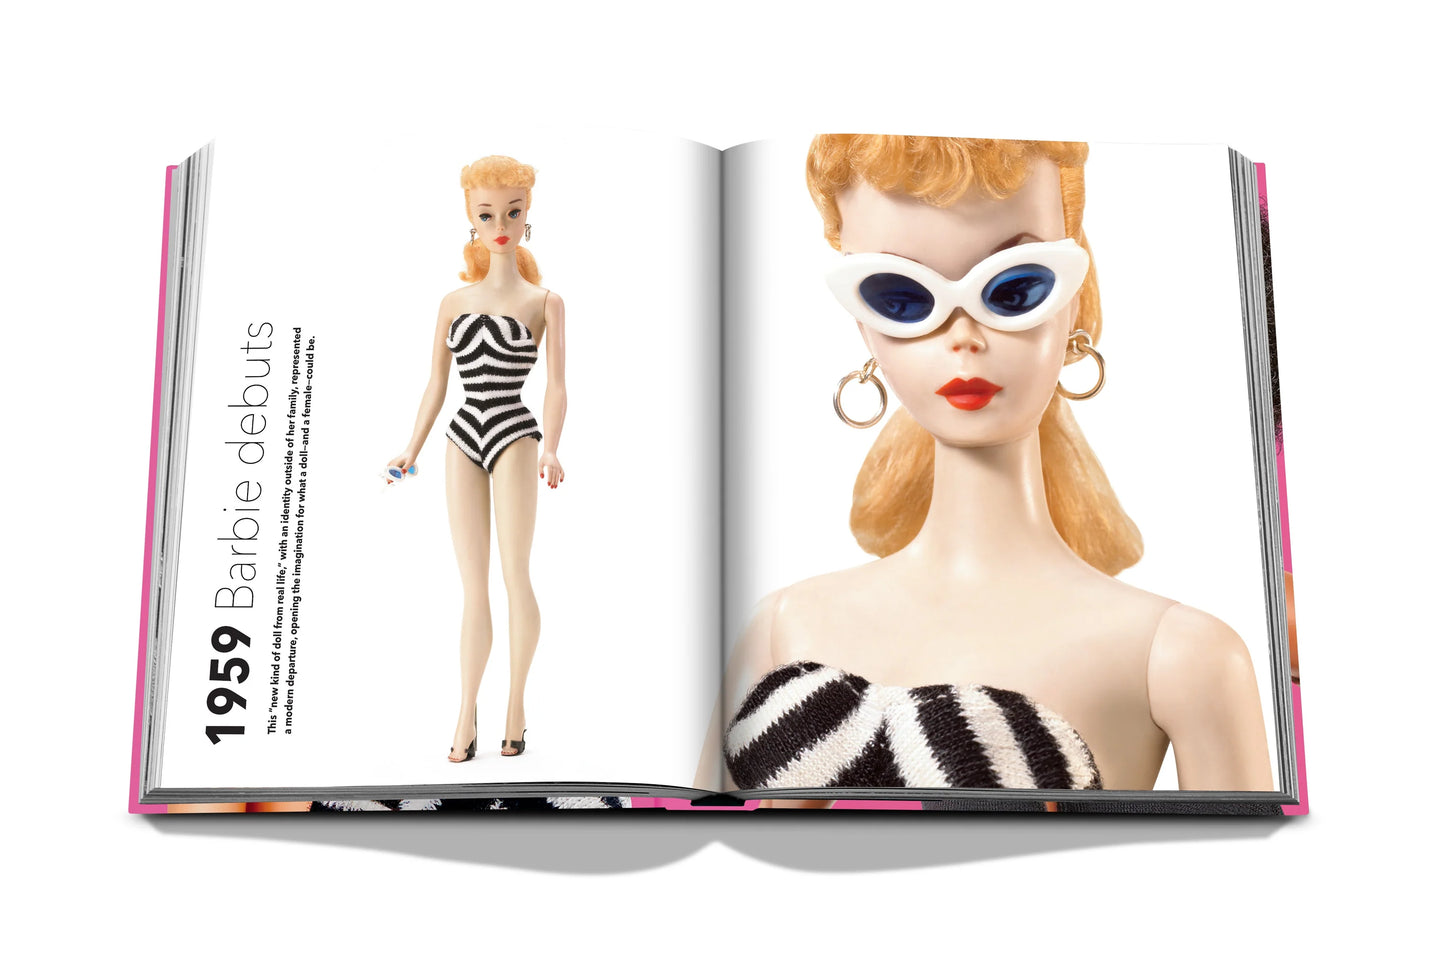 Barbie-Buch